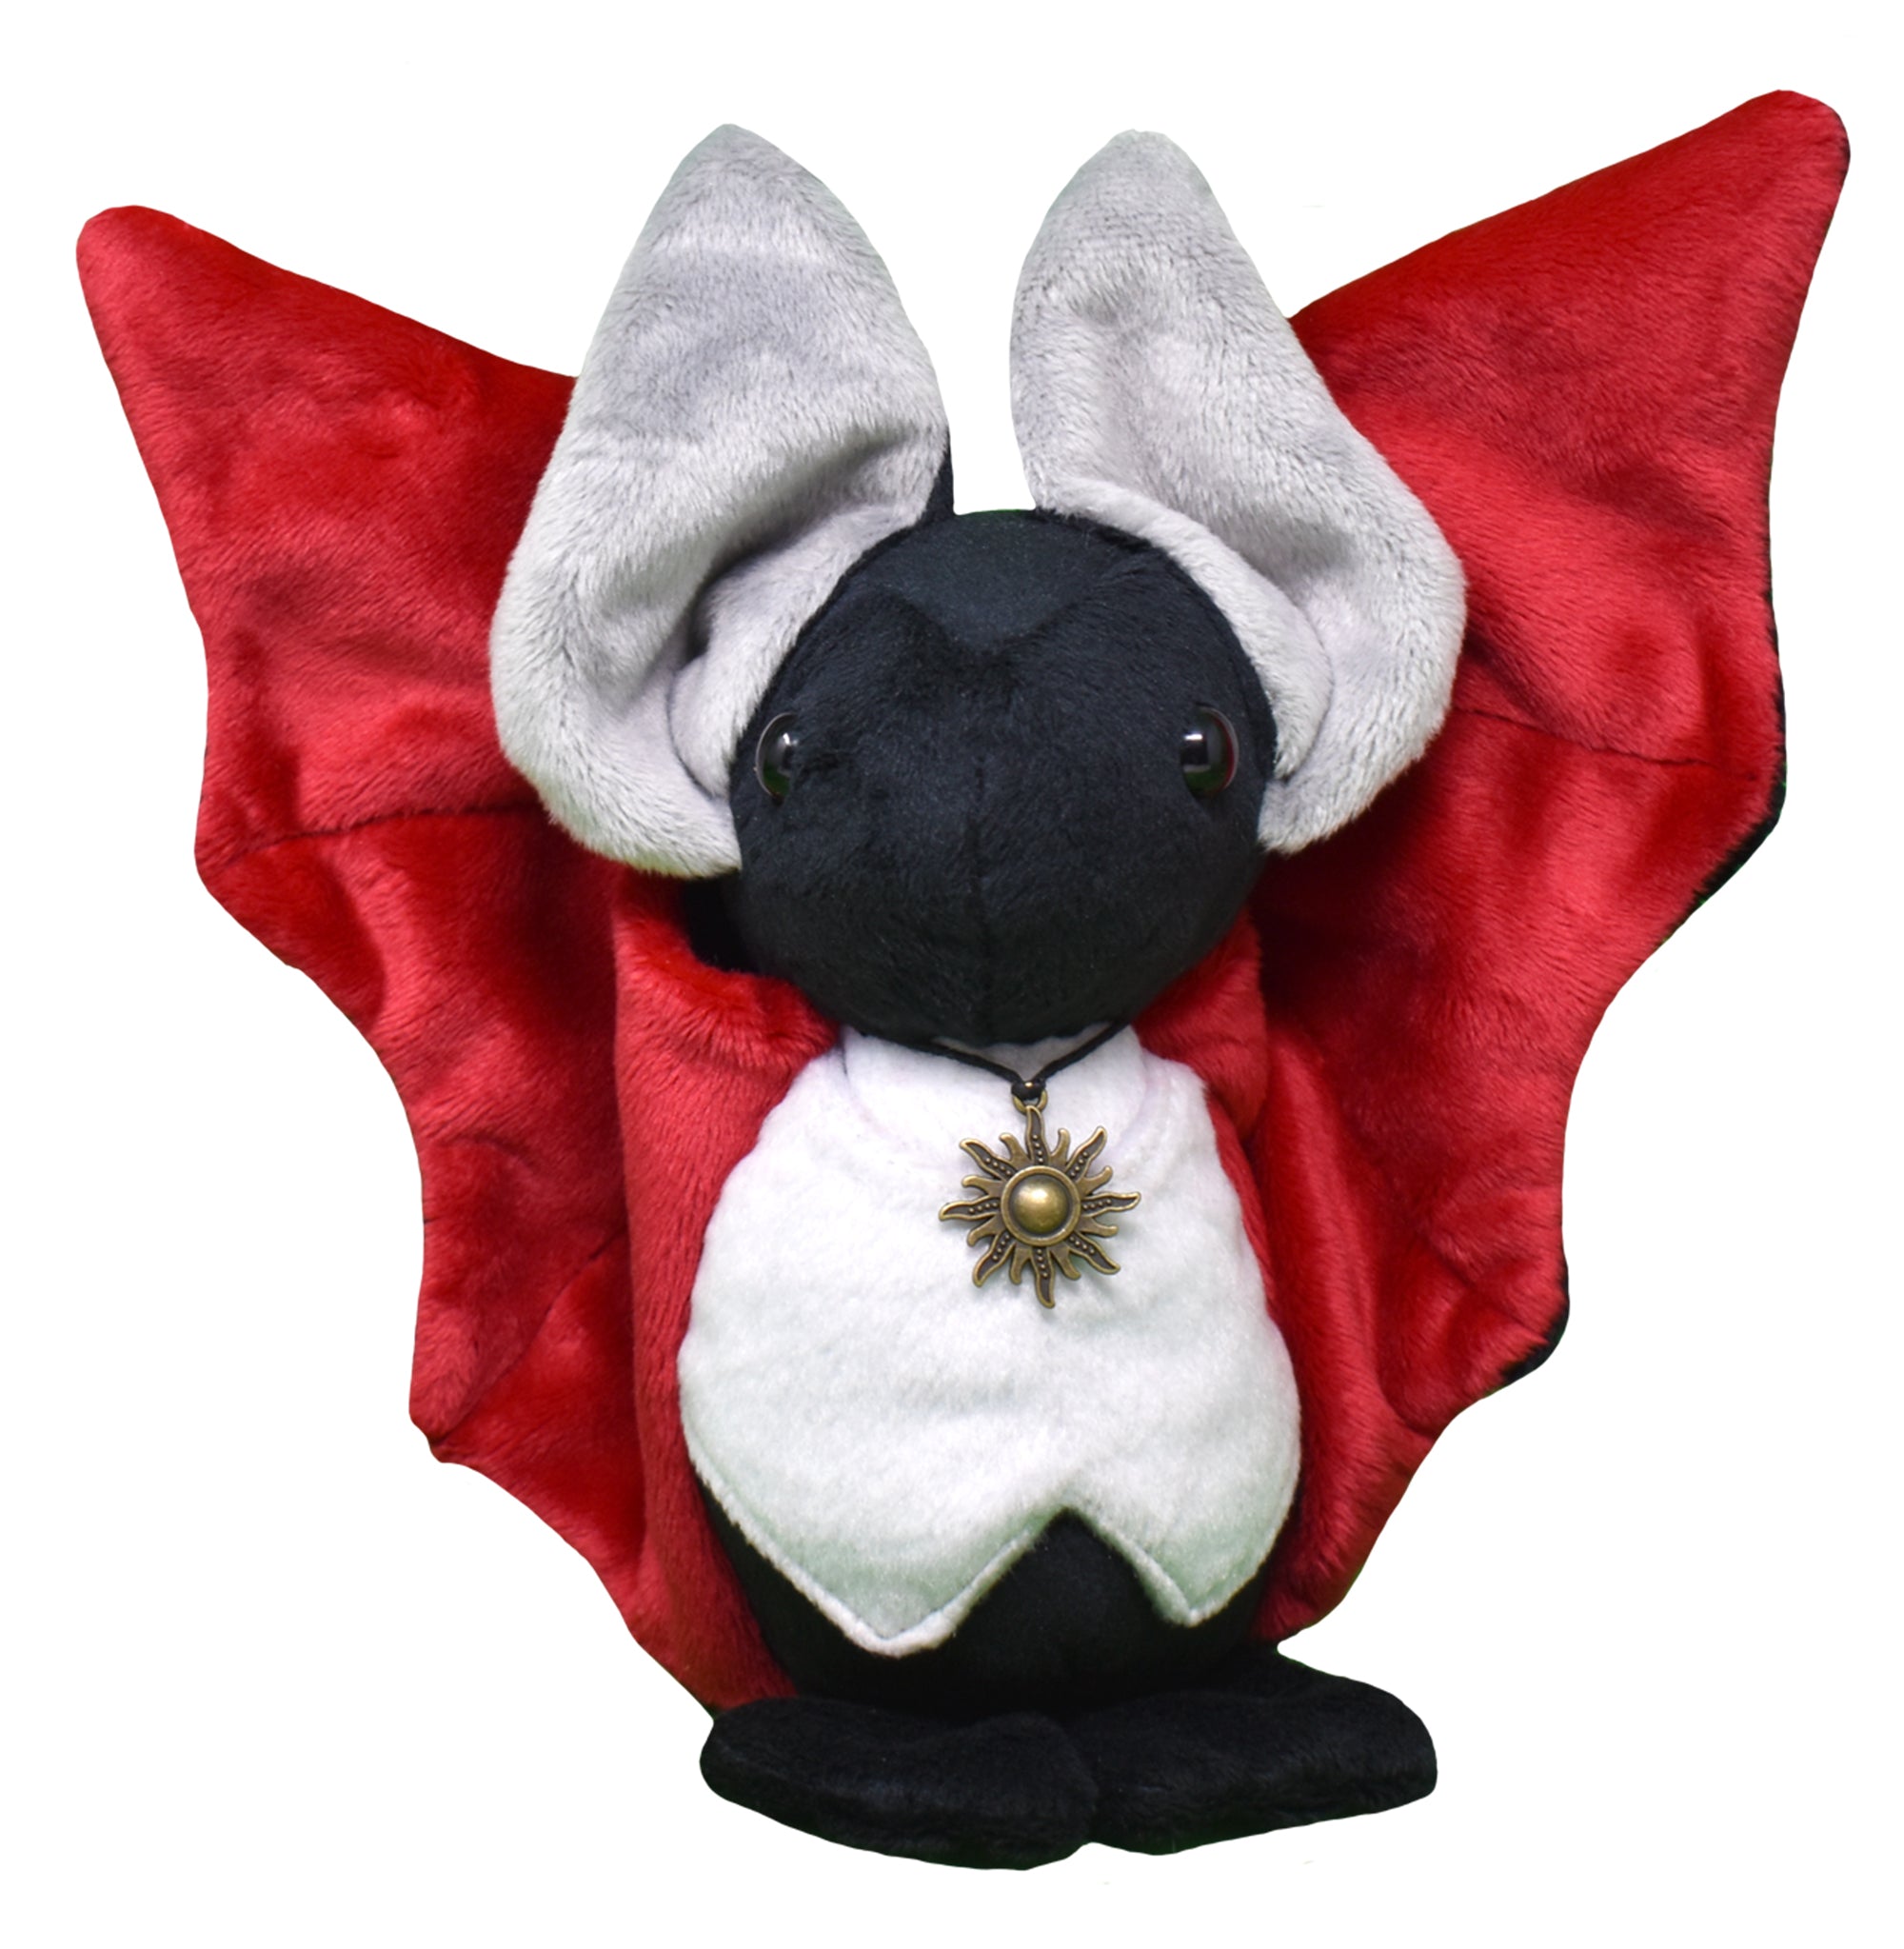 Drac spookling bat wings expanded